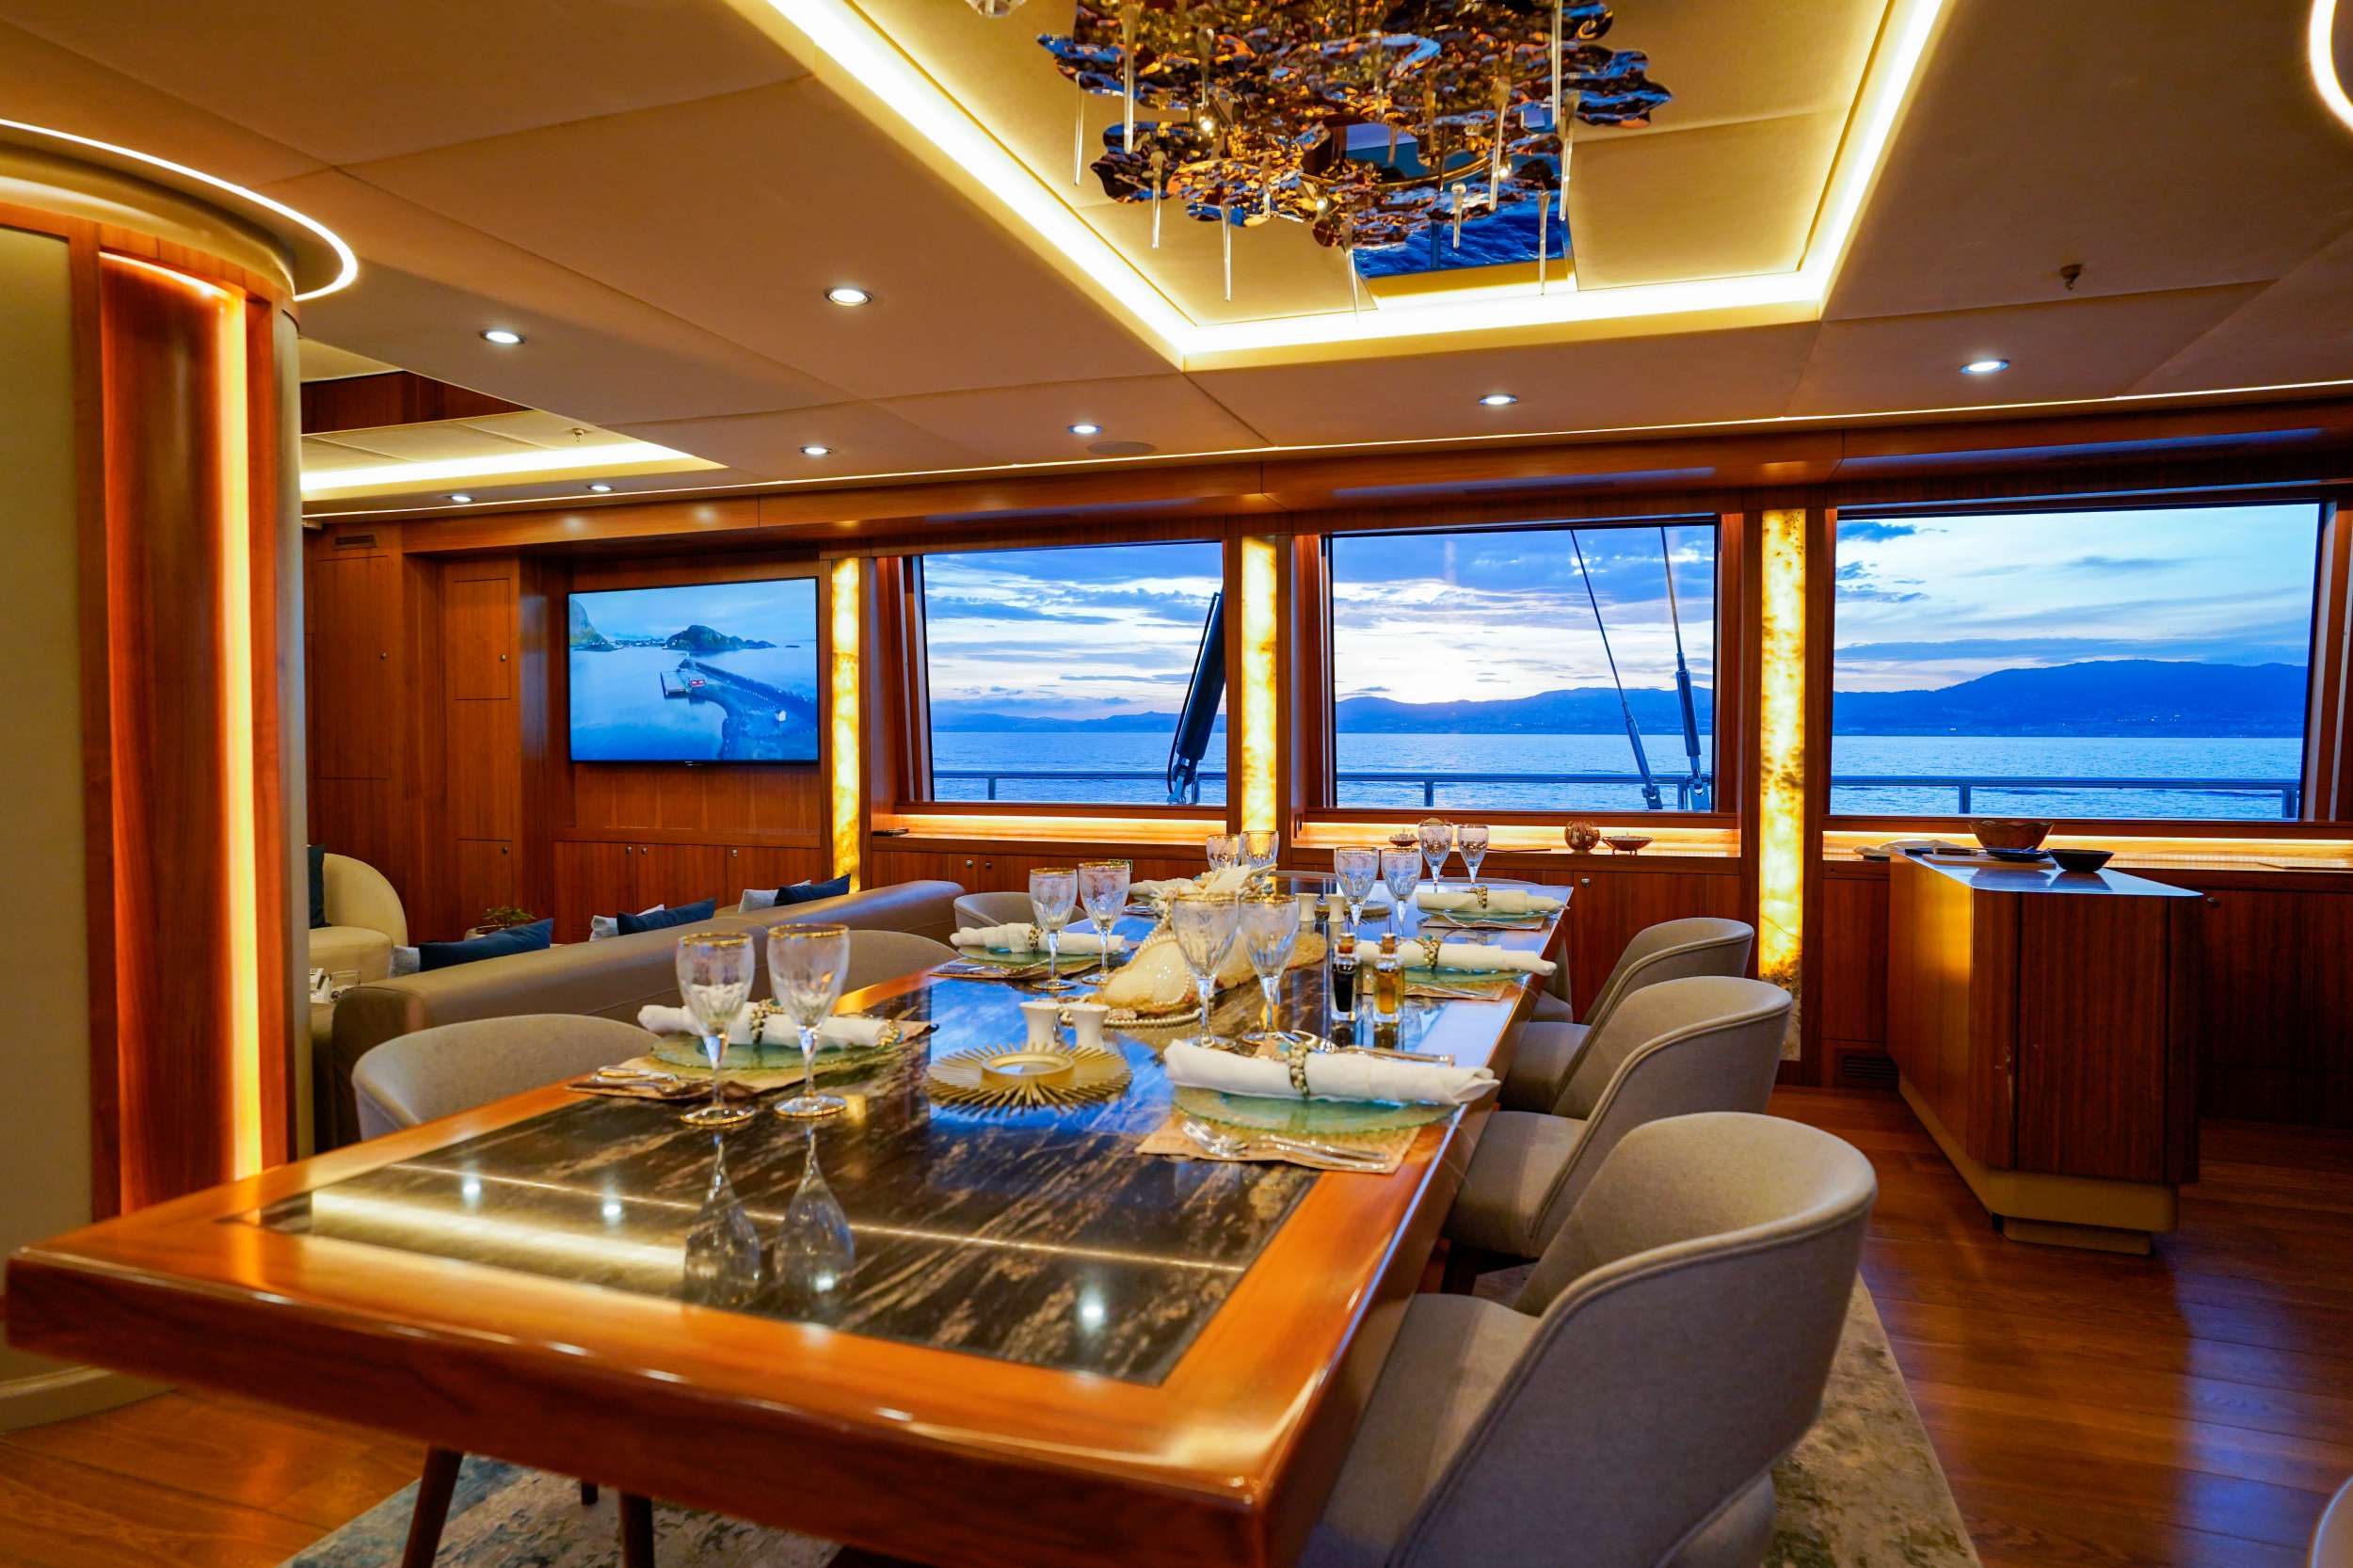 ARESTEAS - Yacht Charter Antalya & Boat hire in W. Med -Naples/Sicily, W. Med -Riviera/Cors/Sard., W. Med - Spain/Balearics 2